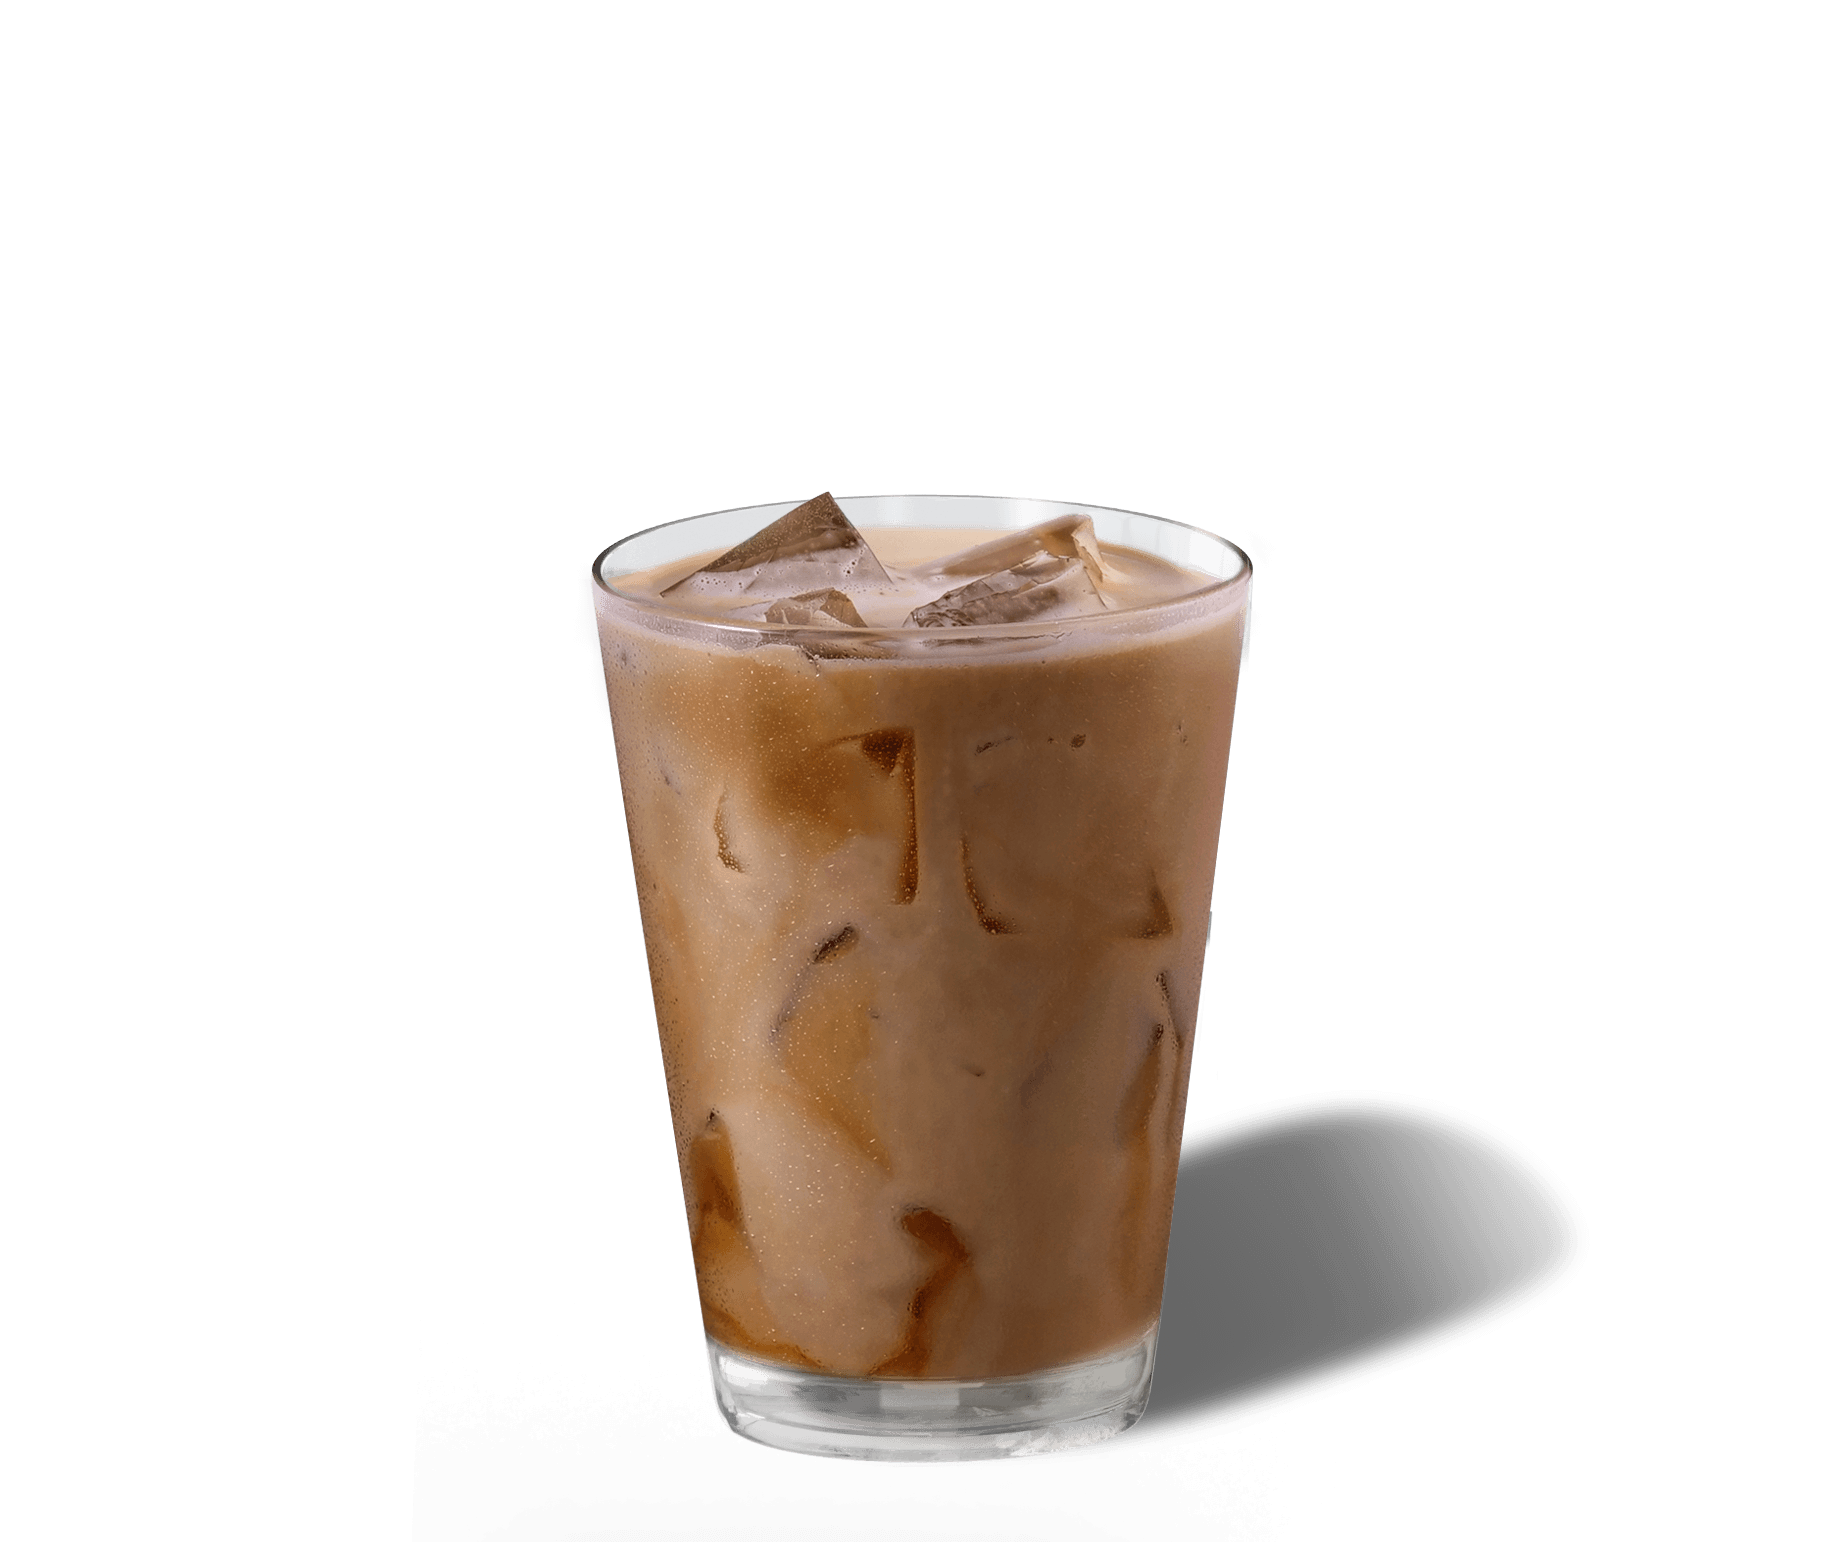 Nescafe Cafe Viet Milky Iced Coffee Instant Coffee